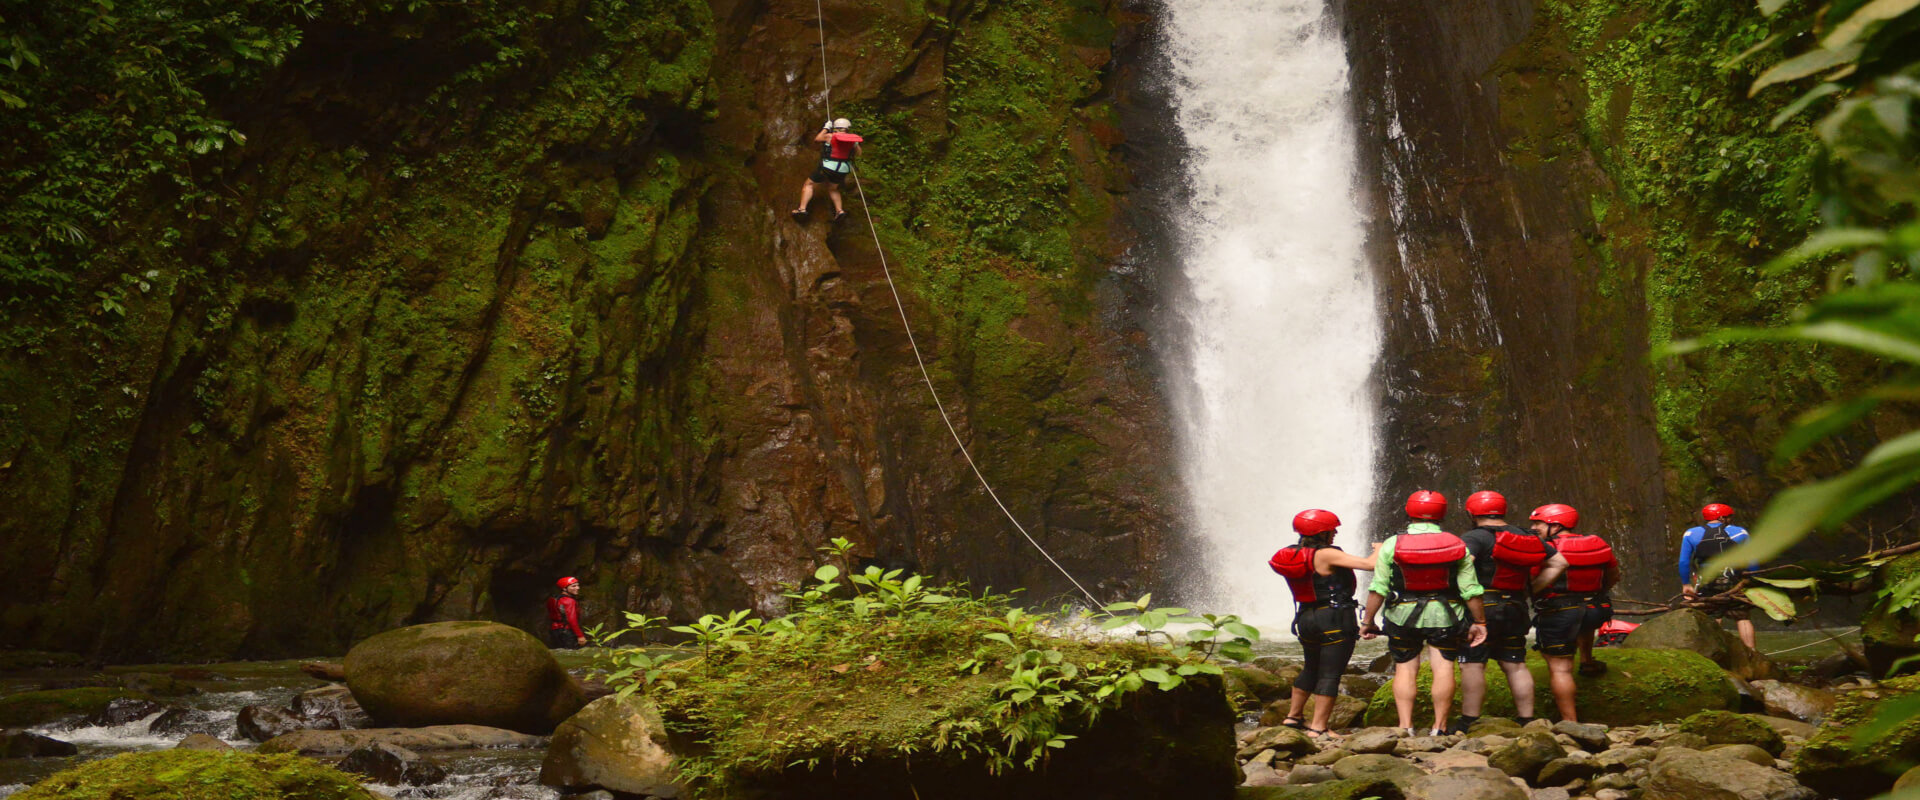 Gravity Falls Waterfall Jumping | Costa Rica Jade Tours